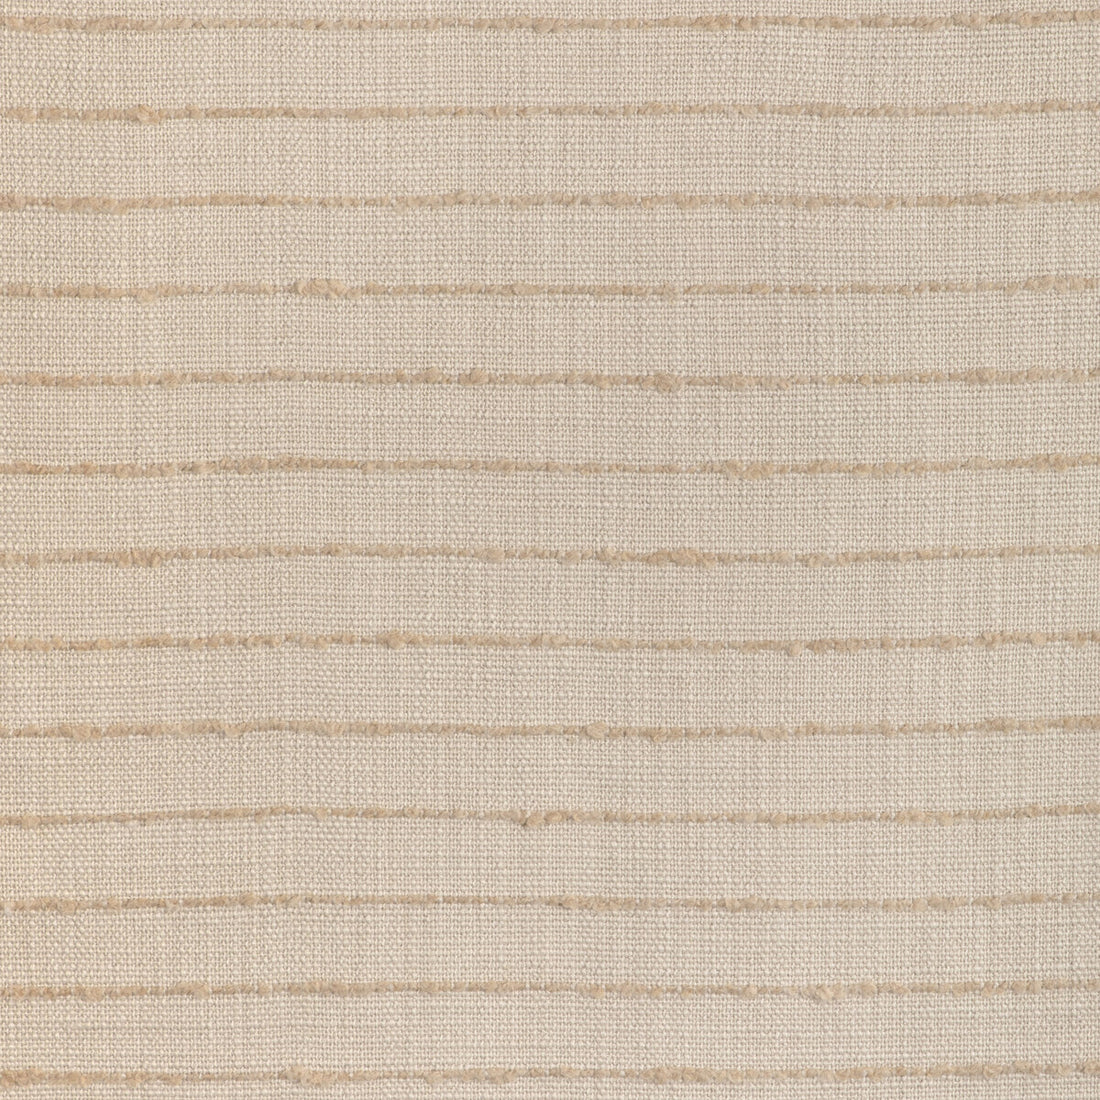 Les Vignes Stripe fabric in linen color - pattern 8024116.16.0 - by Brunschwig &amp; Fils in the Les Ensembliers L&